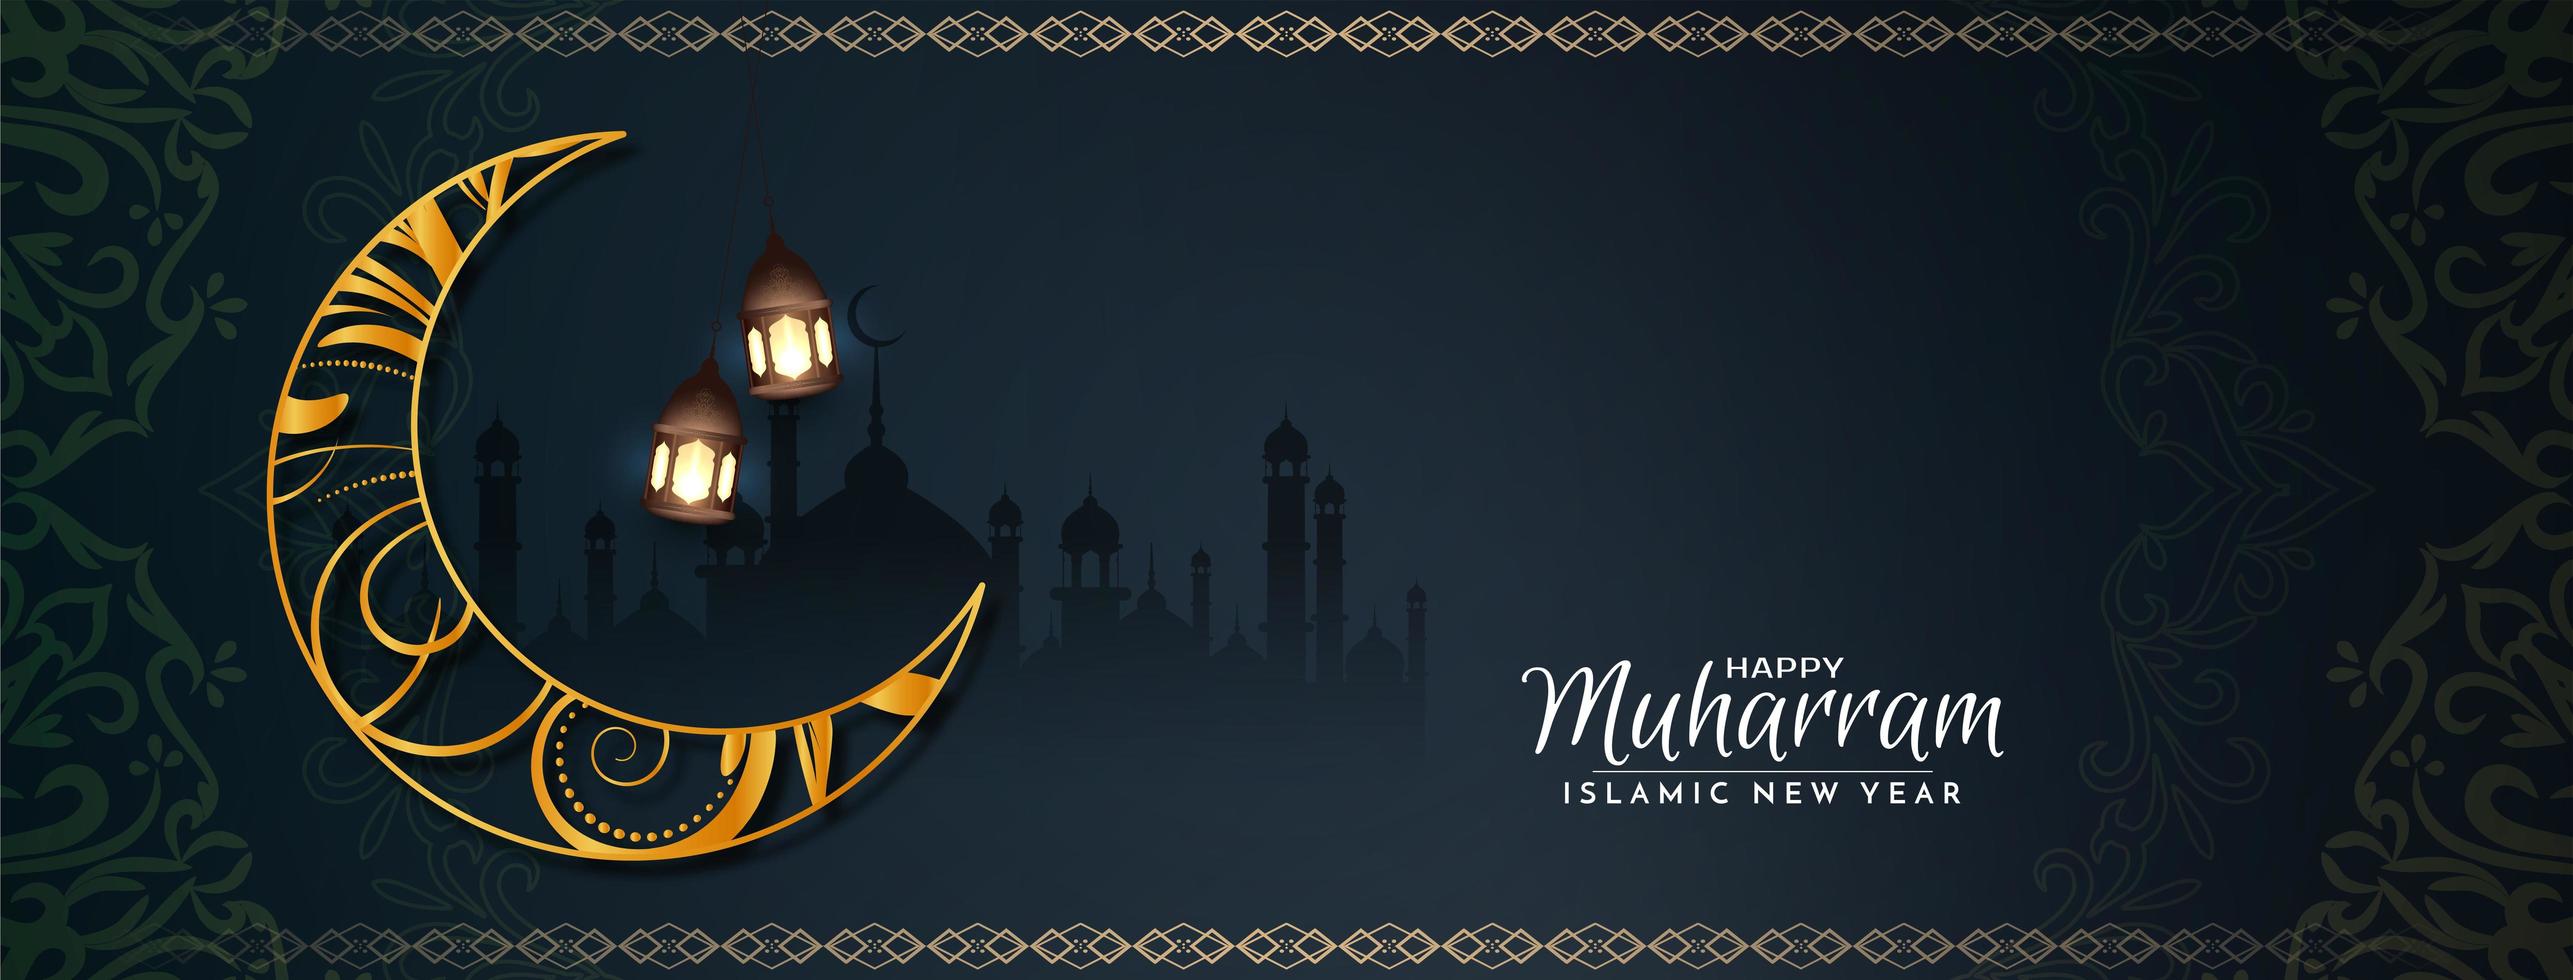 Religious Happy Muharram banner design with moon  vector